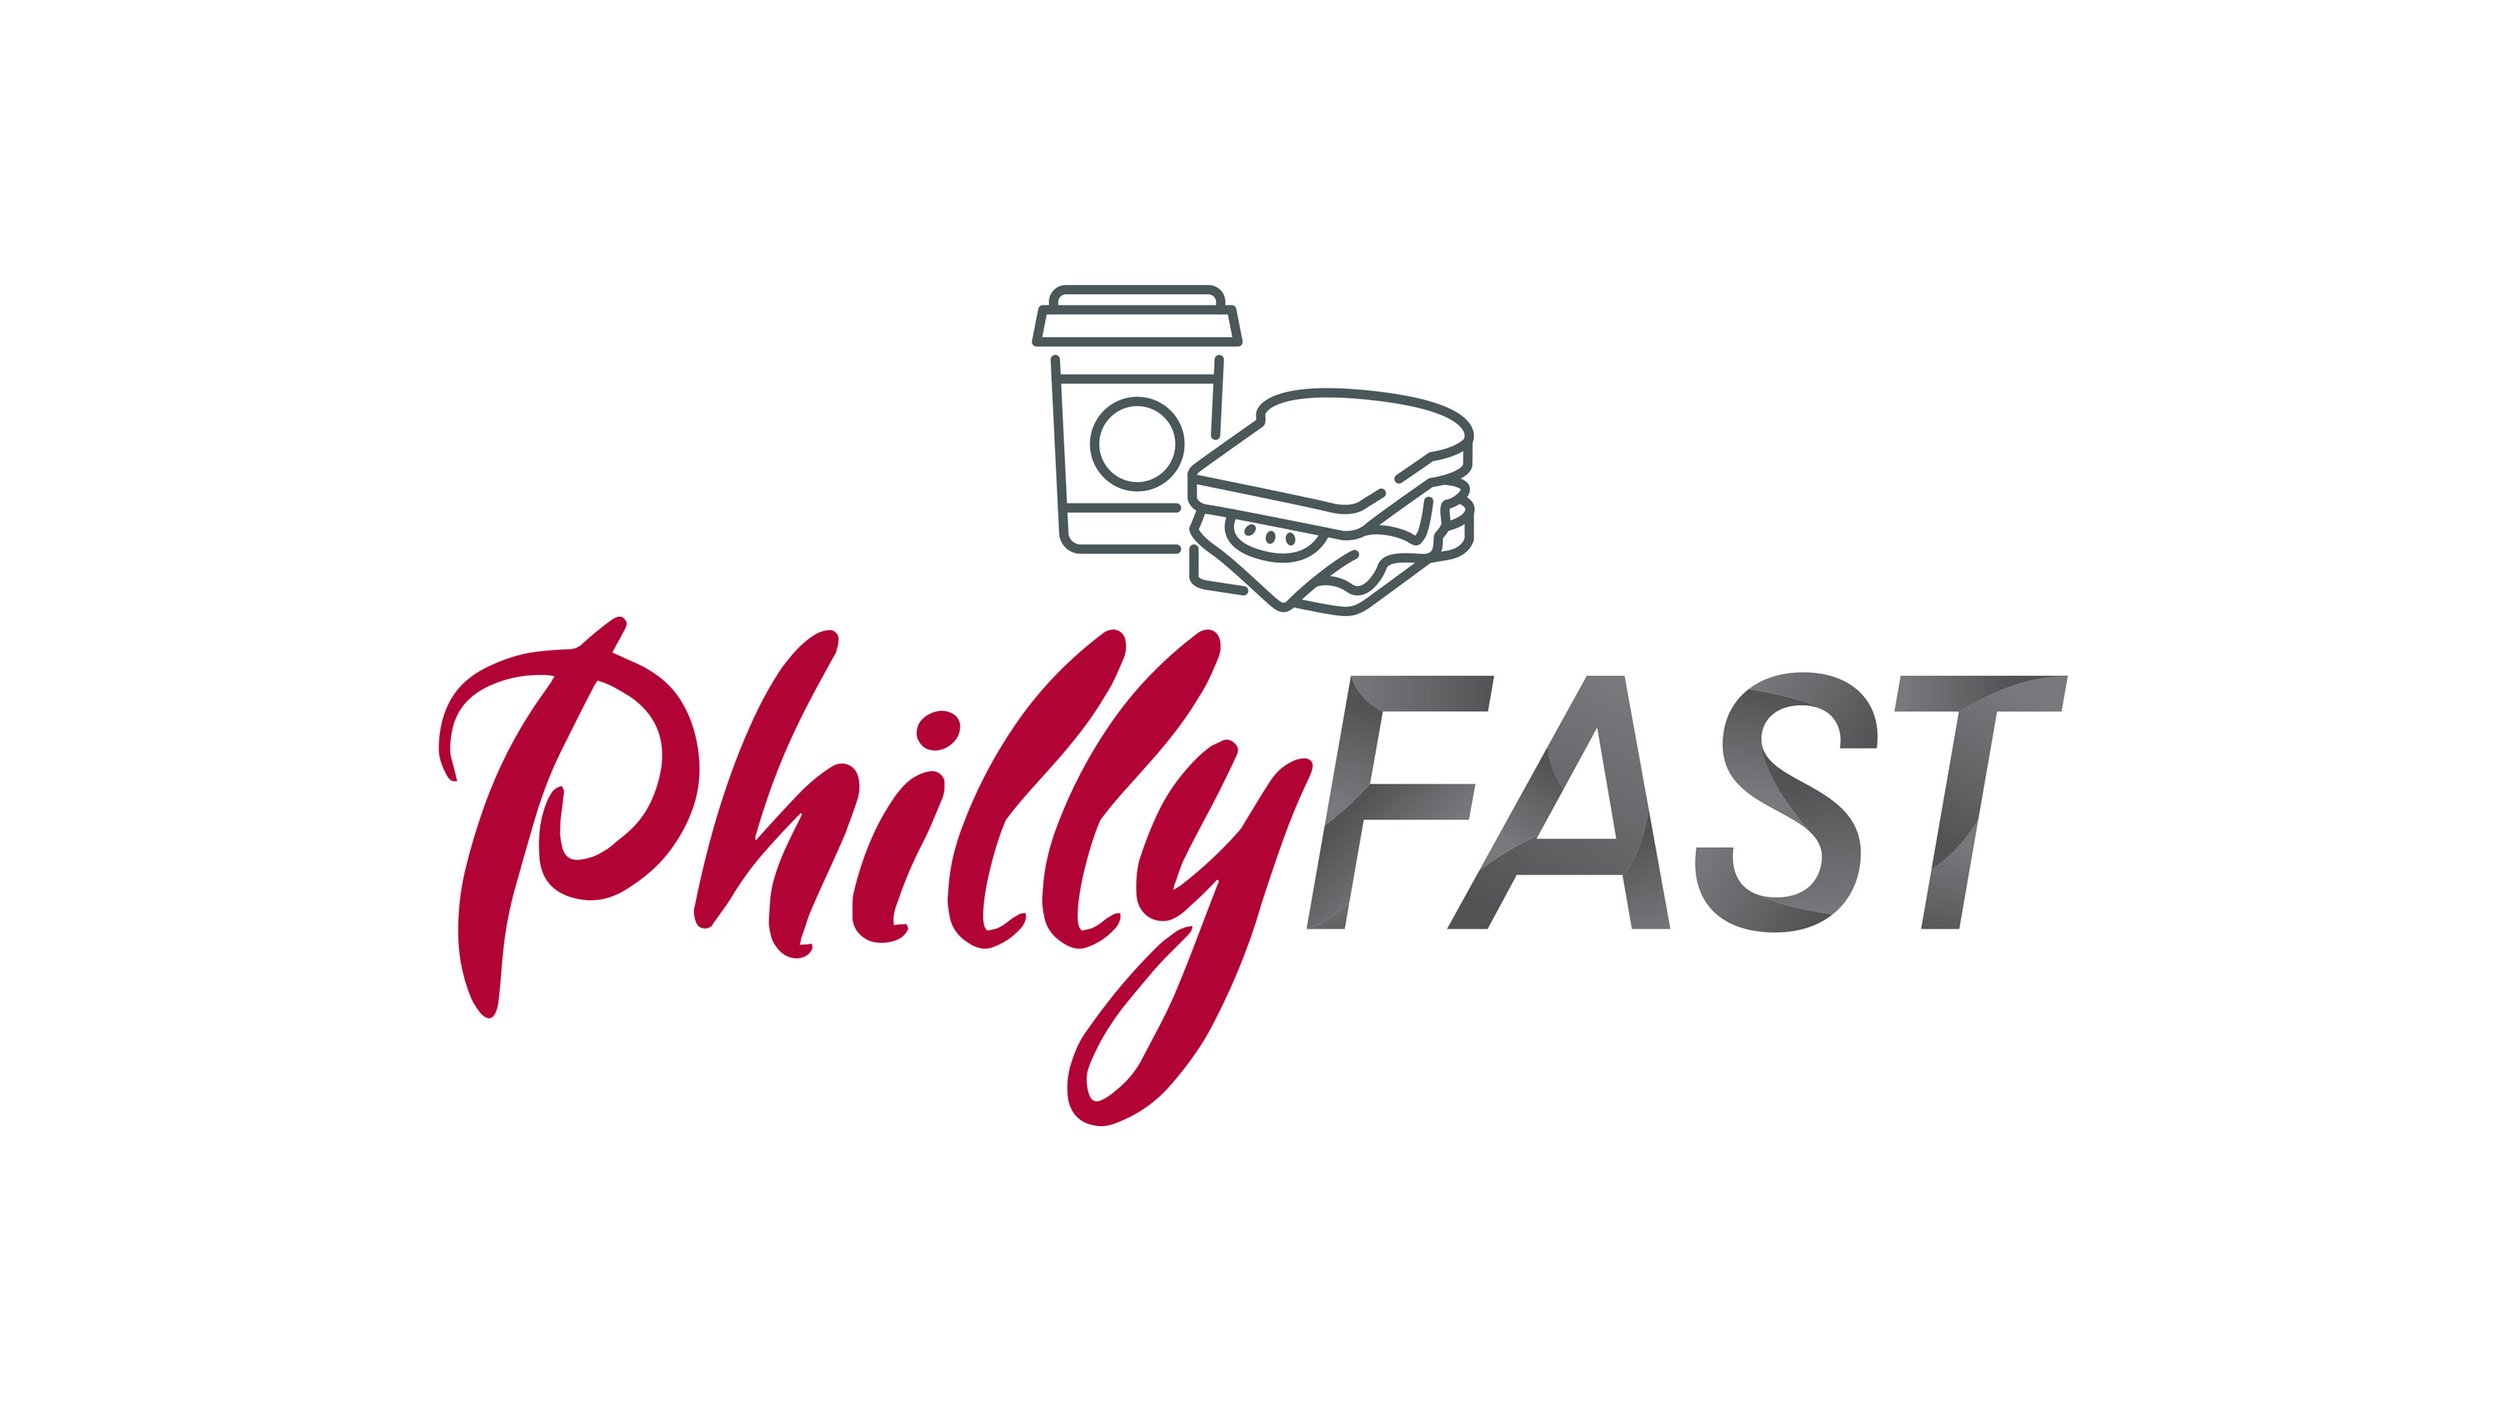 Philly_Fast_logo_3.jpg